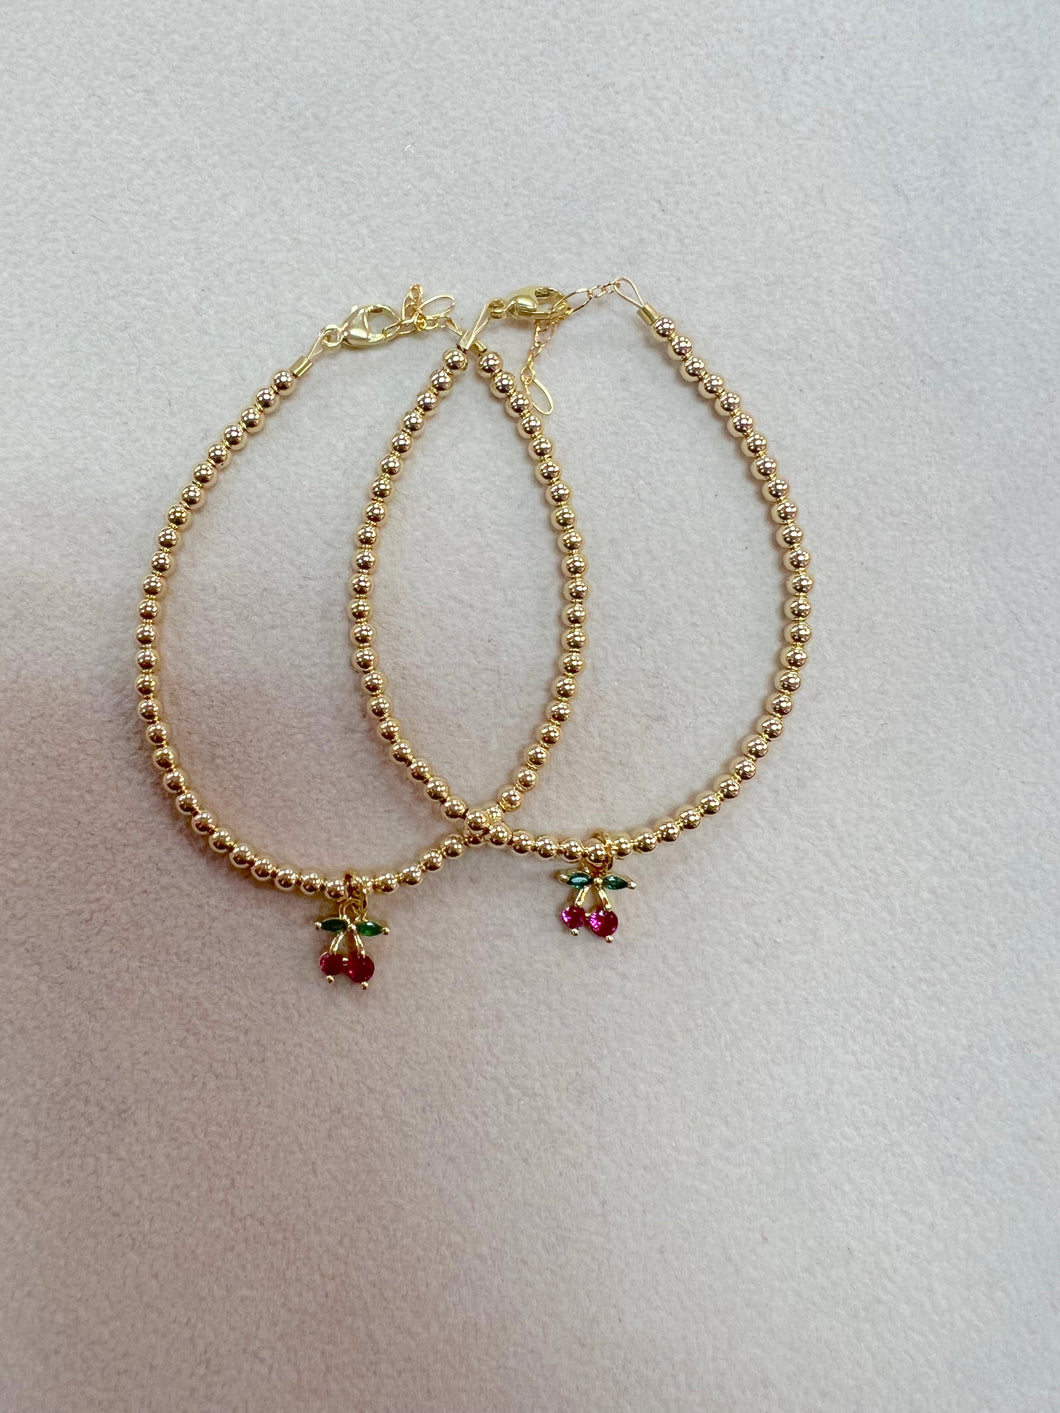 14k Gold Filled Cherry Charm Bracelet